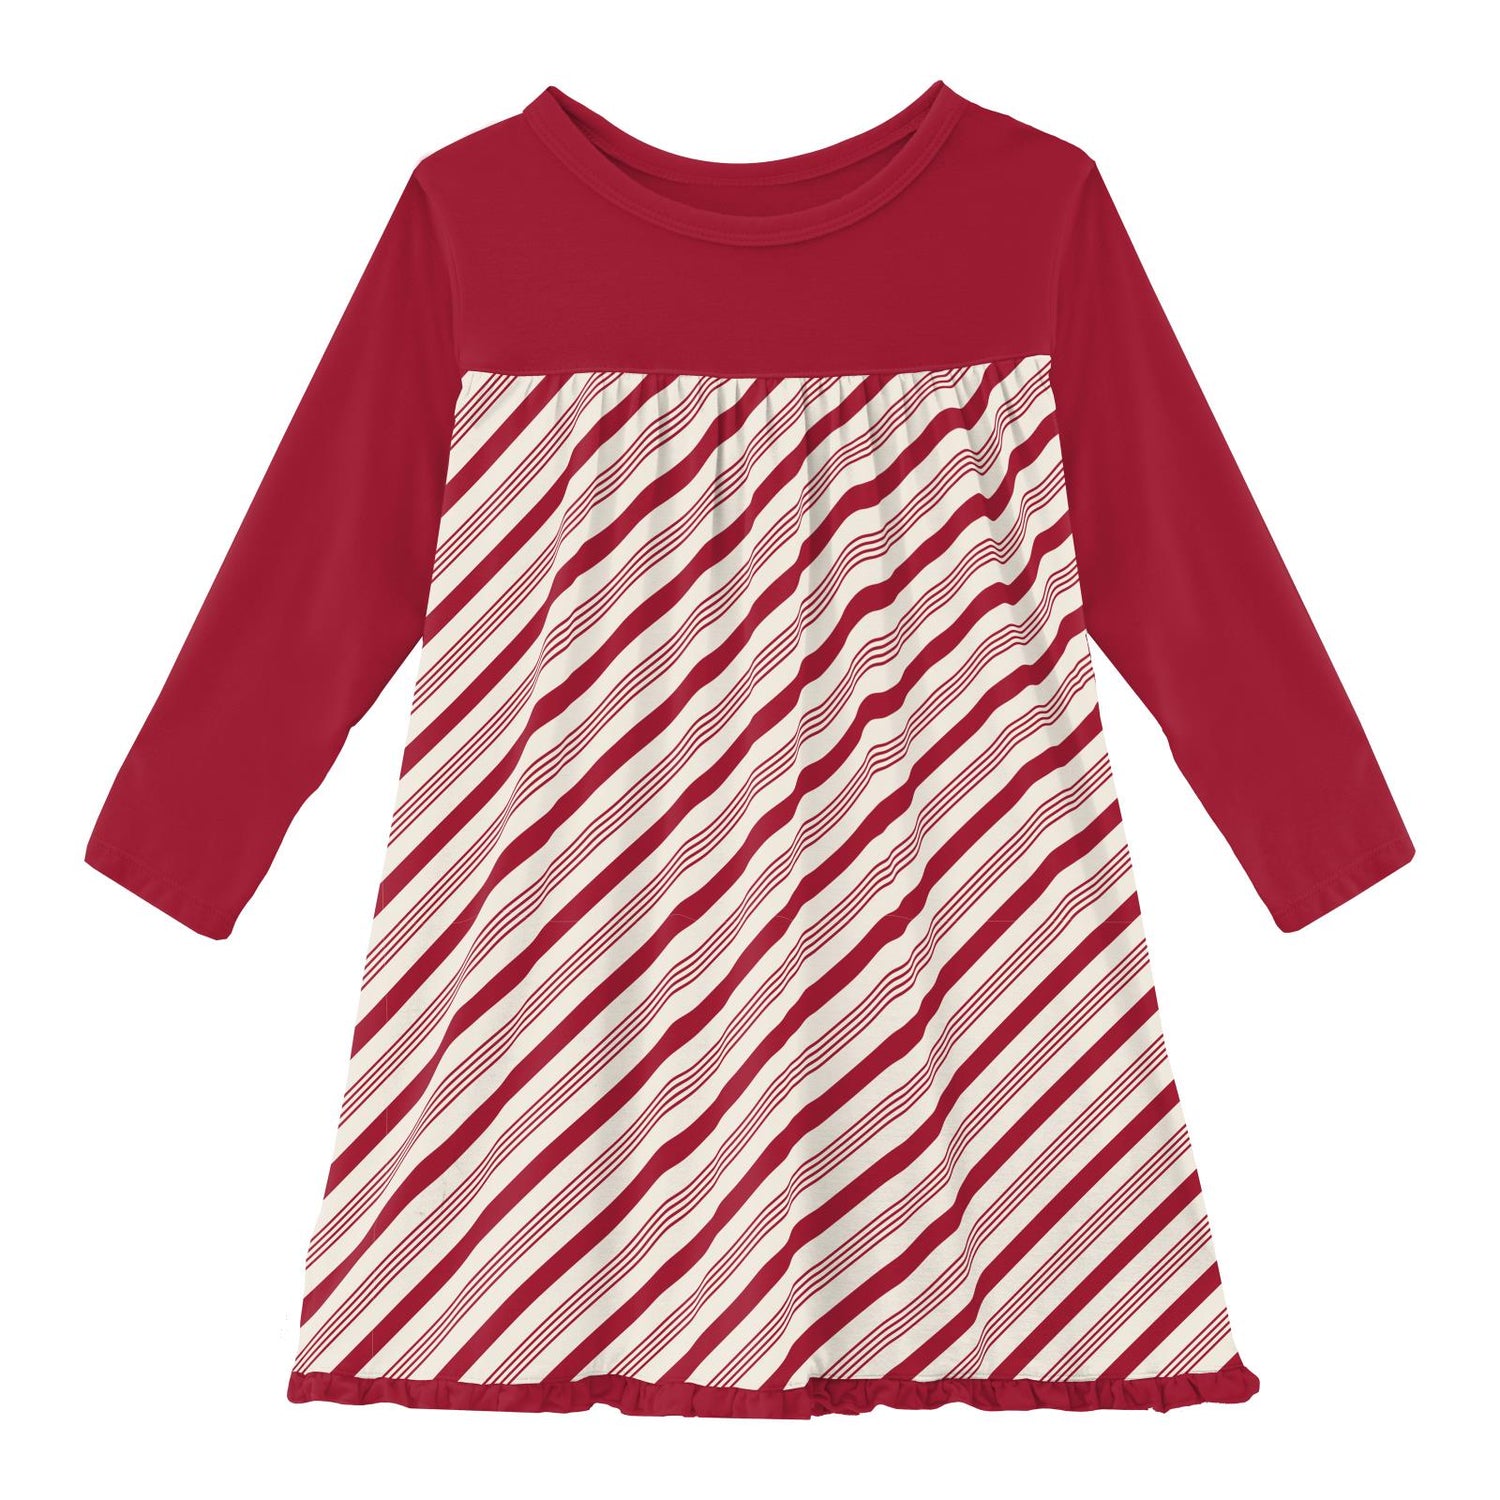 Print Classic Long Sleeve Swing Dress in Crimson Candy Cane Stripe